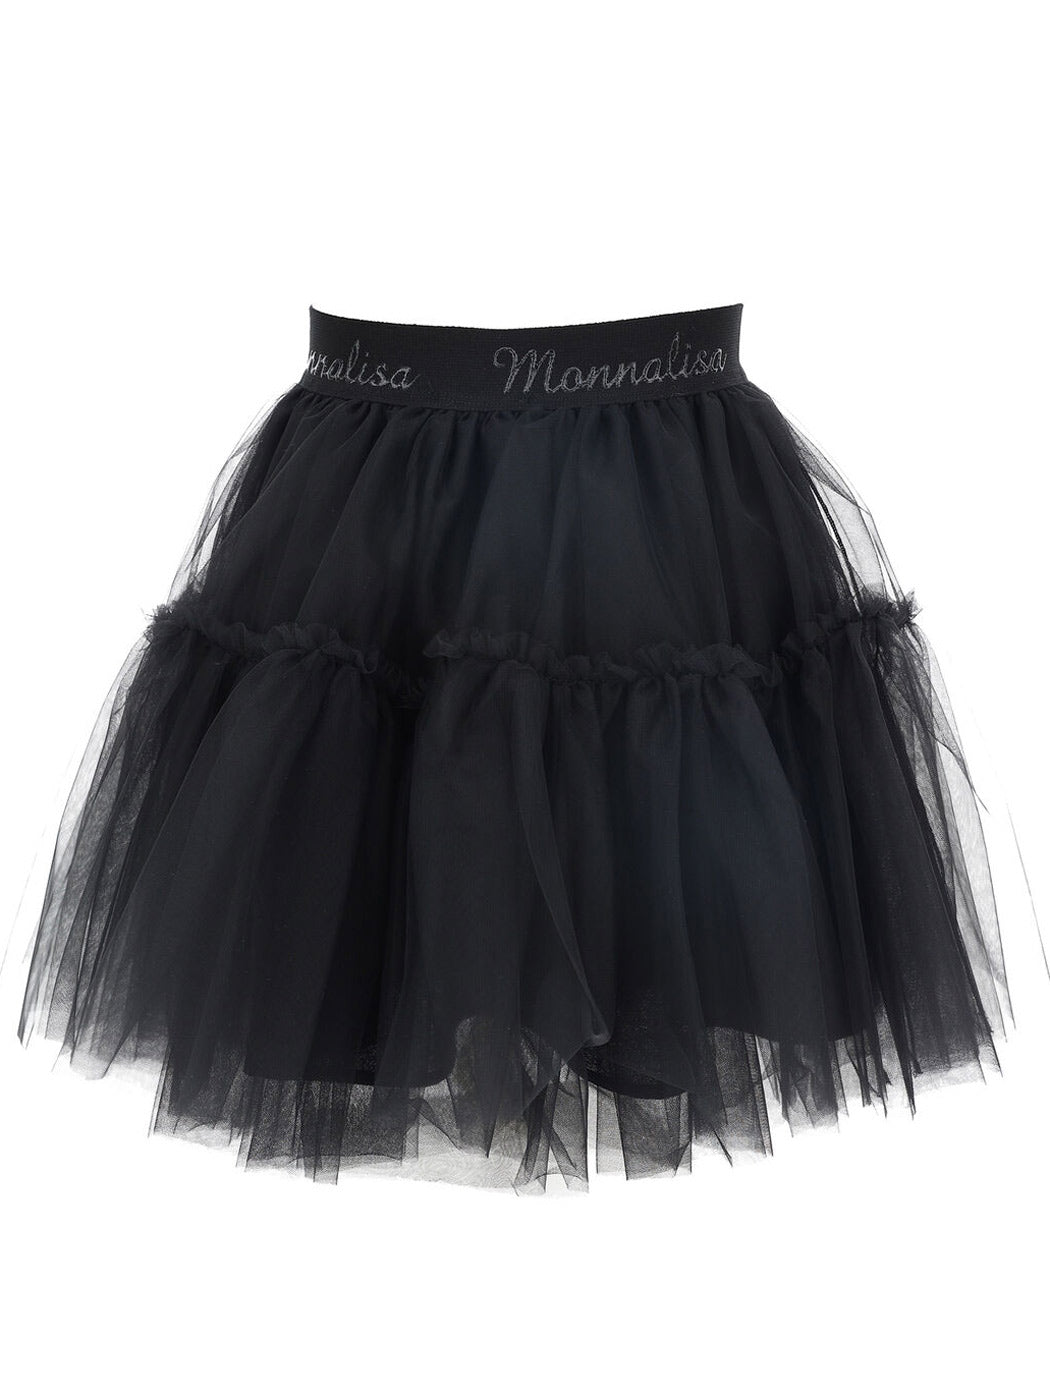 MONNALISA Silk-touch tulle skirt black-17AGON